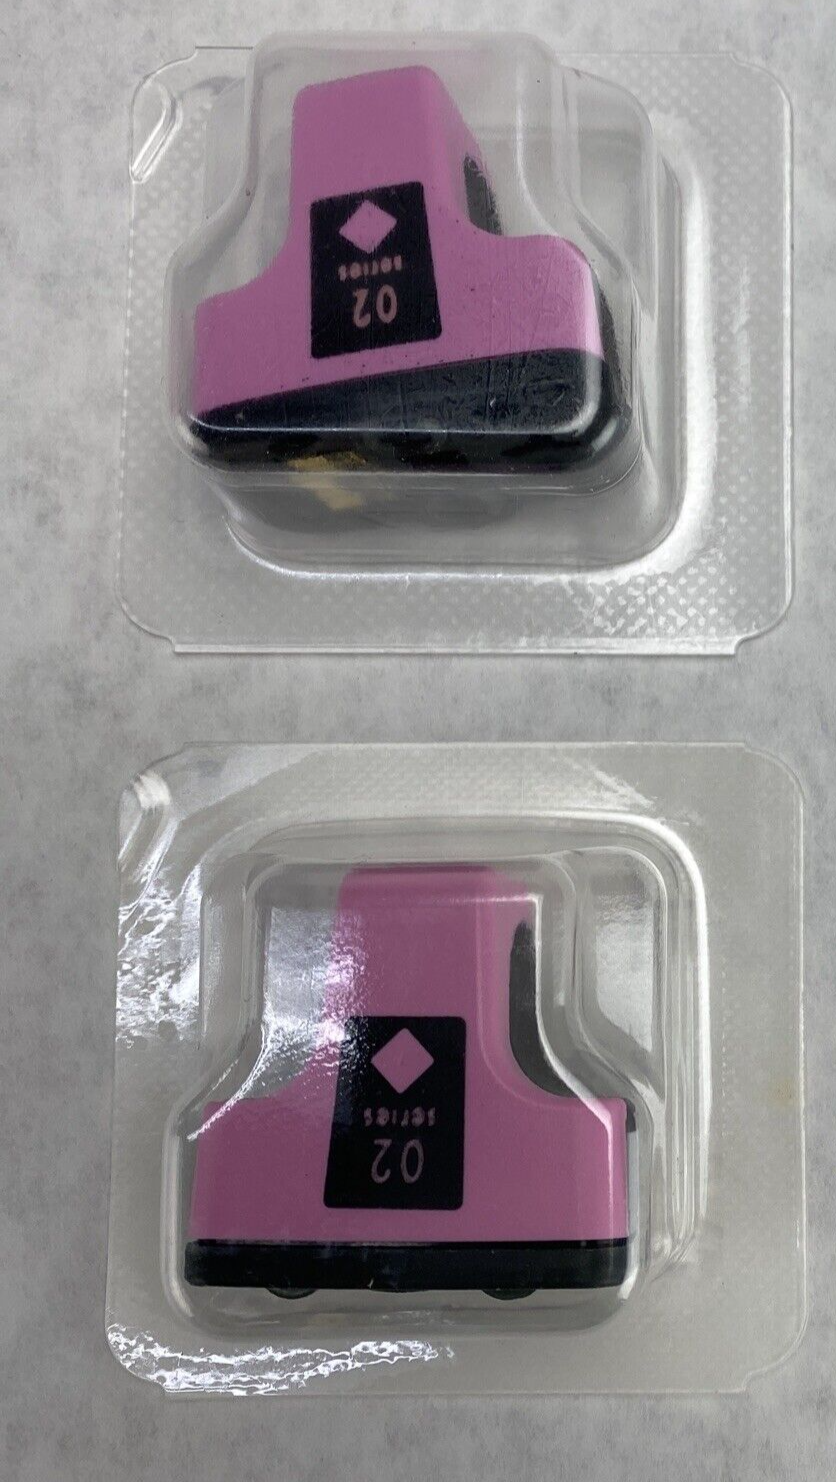 Lot(2) HP PhotoSmart Light Magenta Pink 02 Ink Cartridge NIB Genuine CB284W